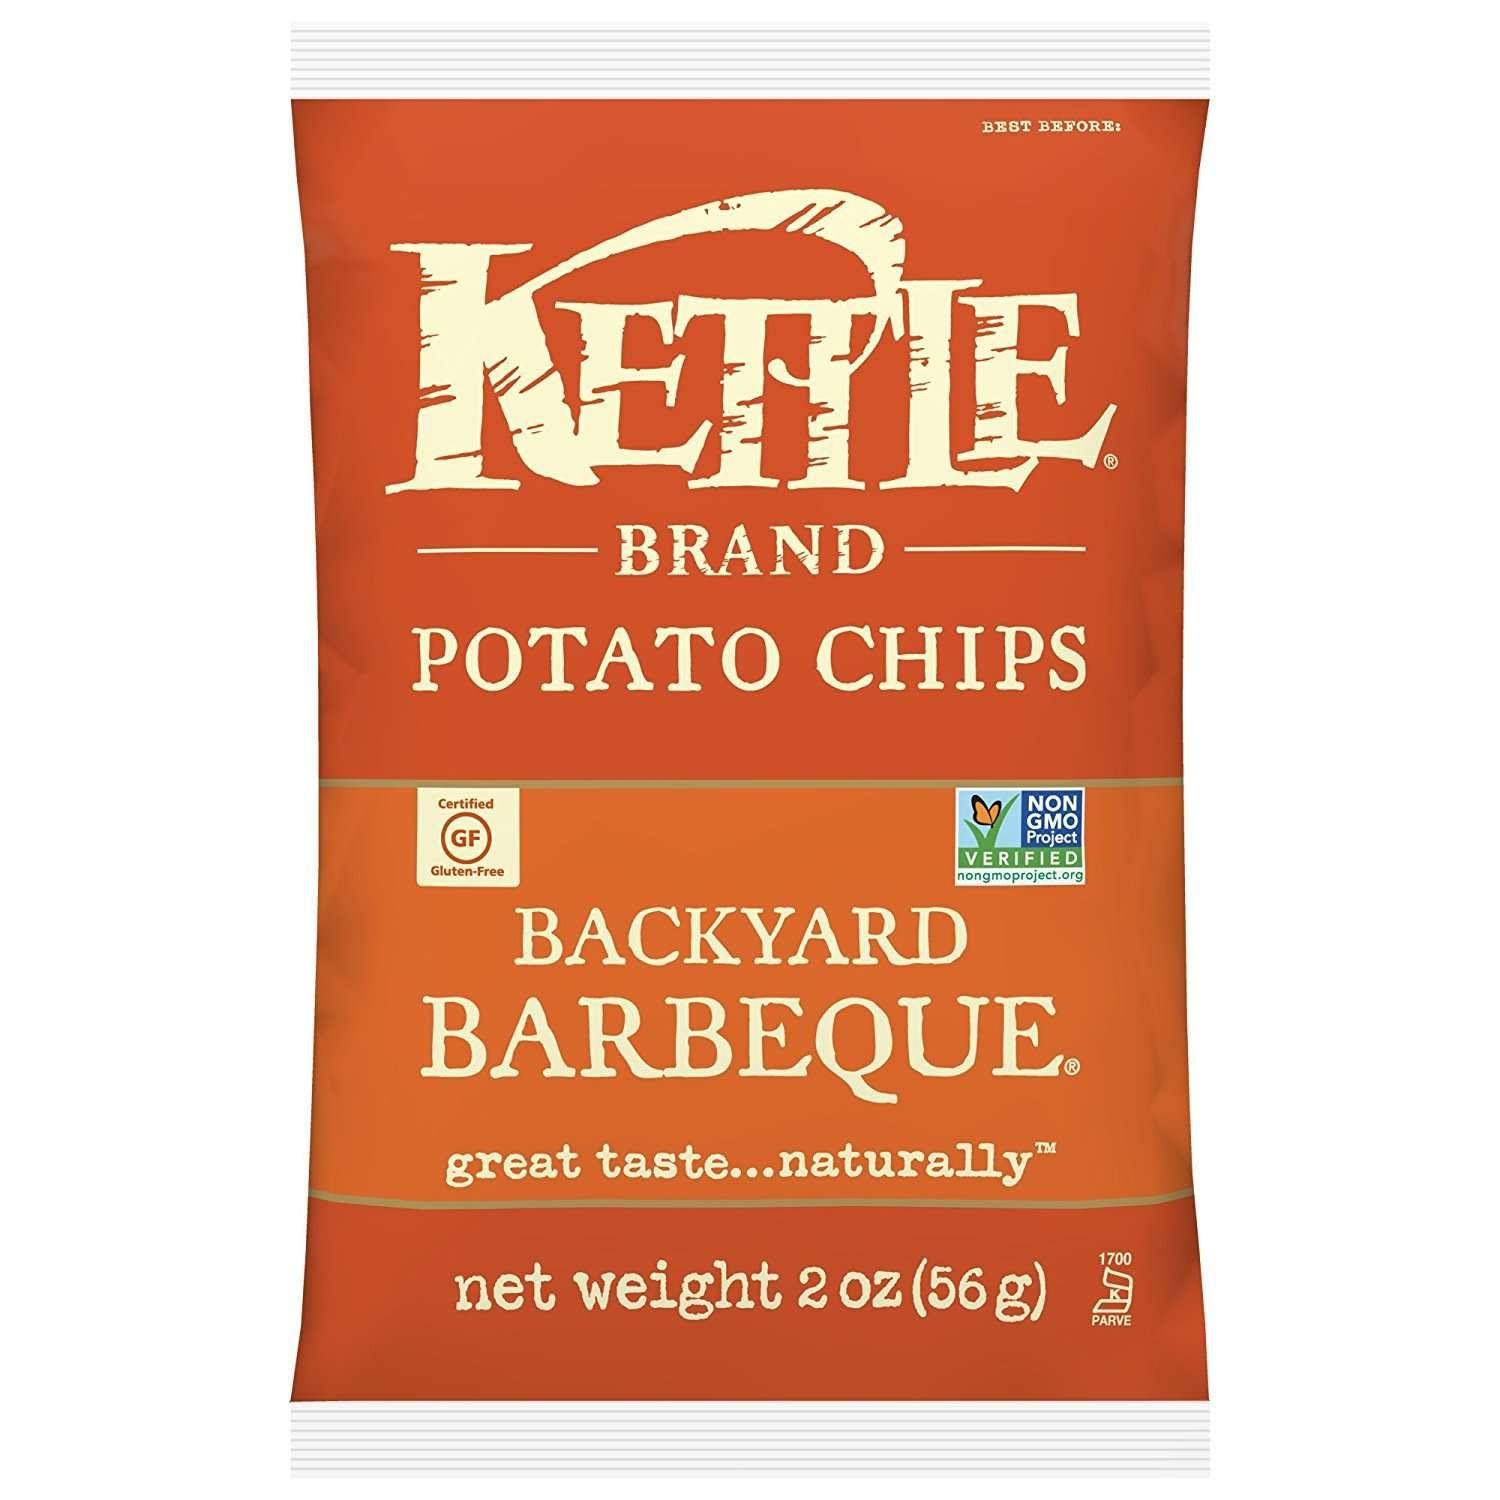 Kettle Brand Potato Chips - Backyard Barbeque, 2oz